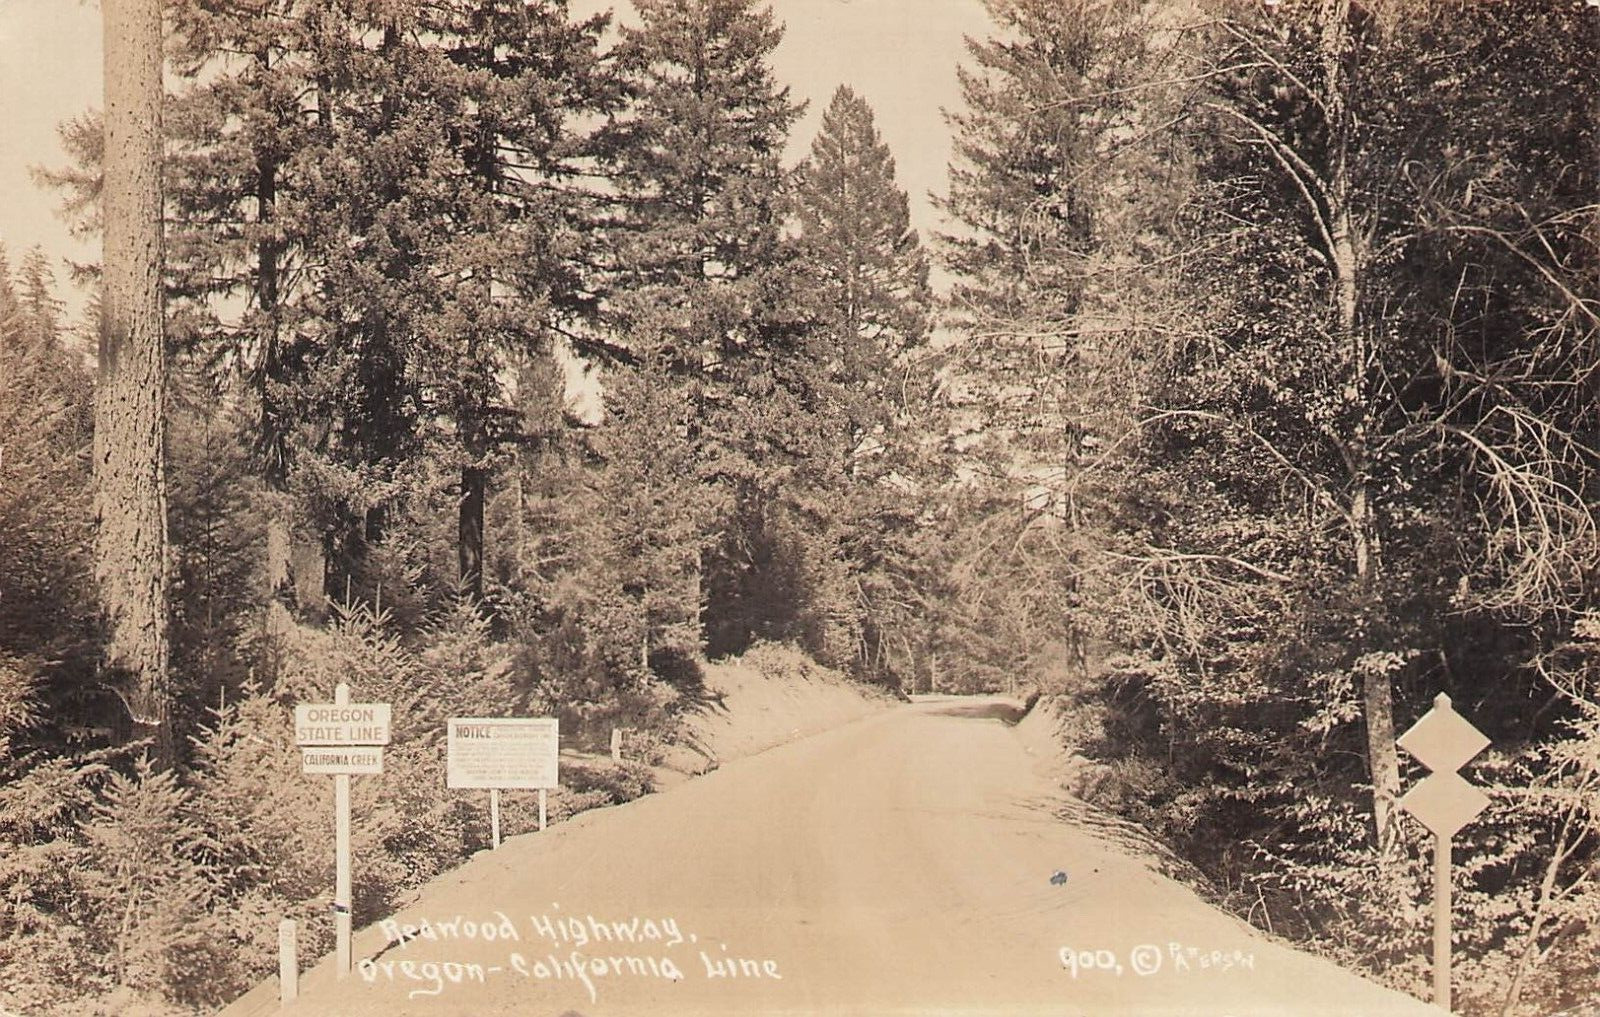 RPPC Redwood Highway Oregon California Line PM 1928 Kerby Oregon